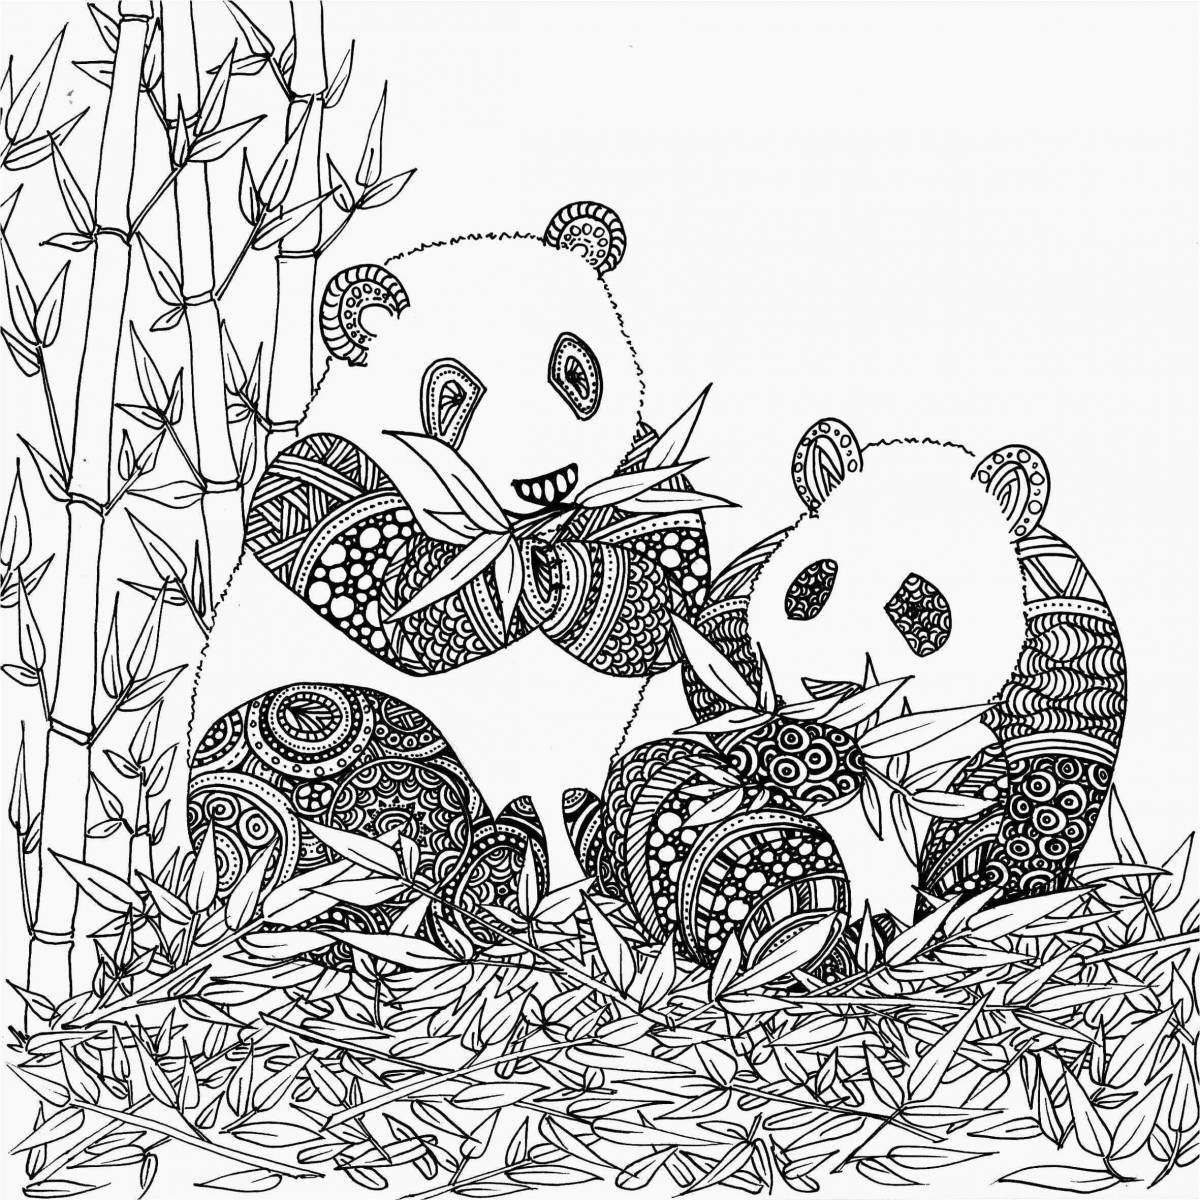 Cute panda coloring page